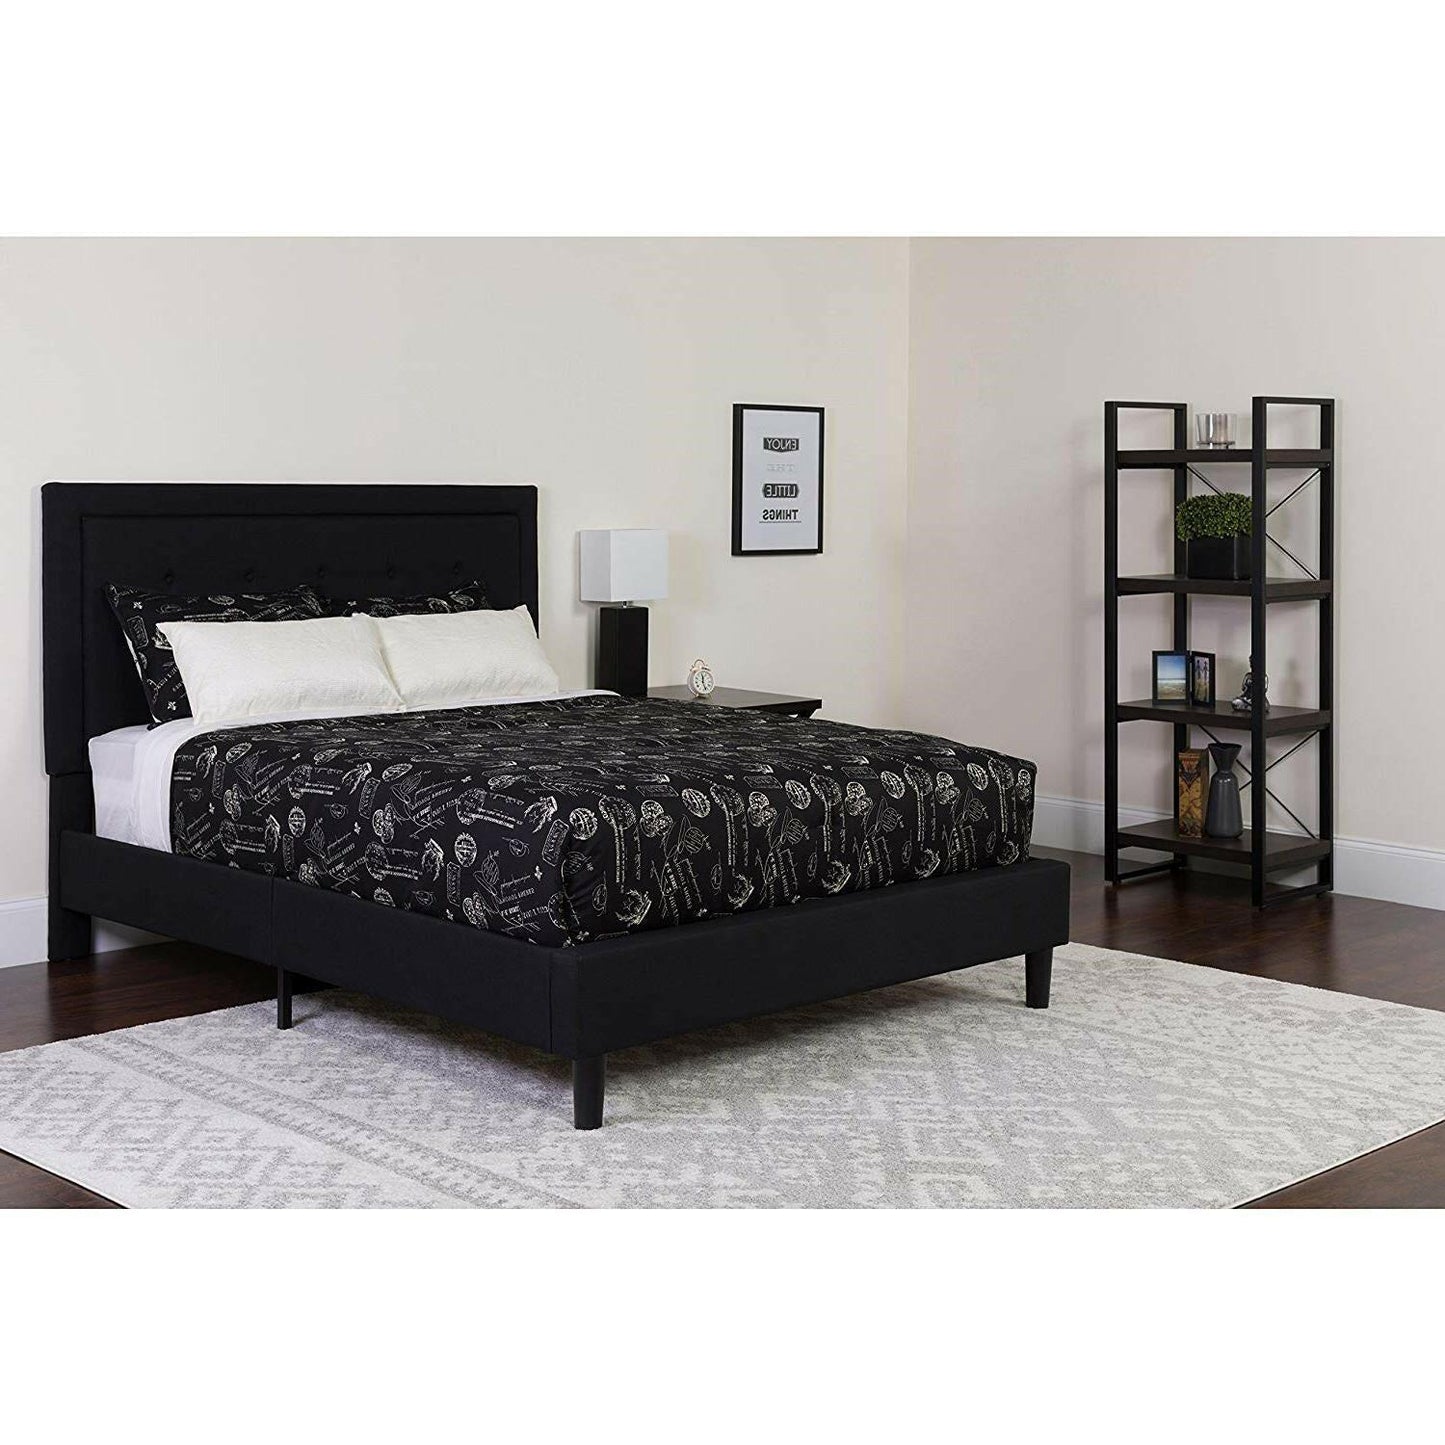 Full size Black Fabric Upholstered Platform Bed Frame with Headboard - FurniFindUSA